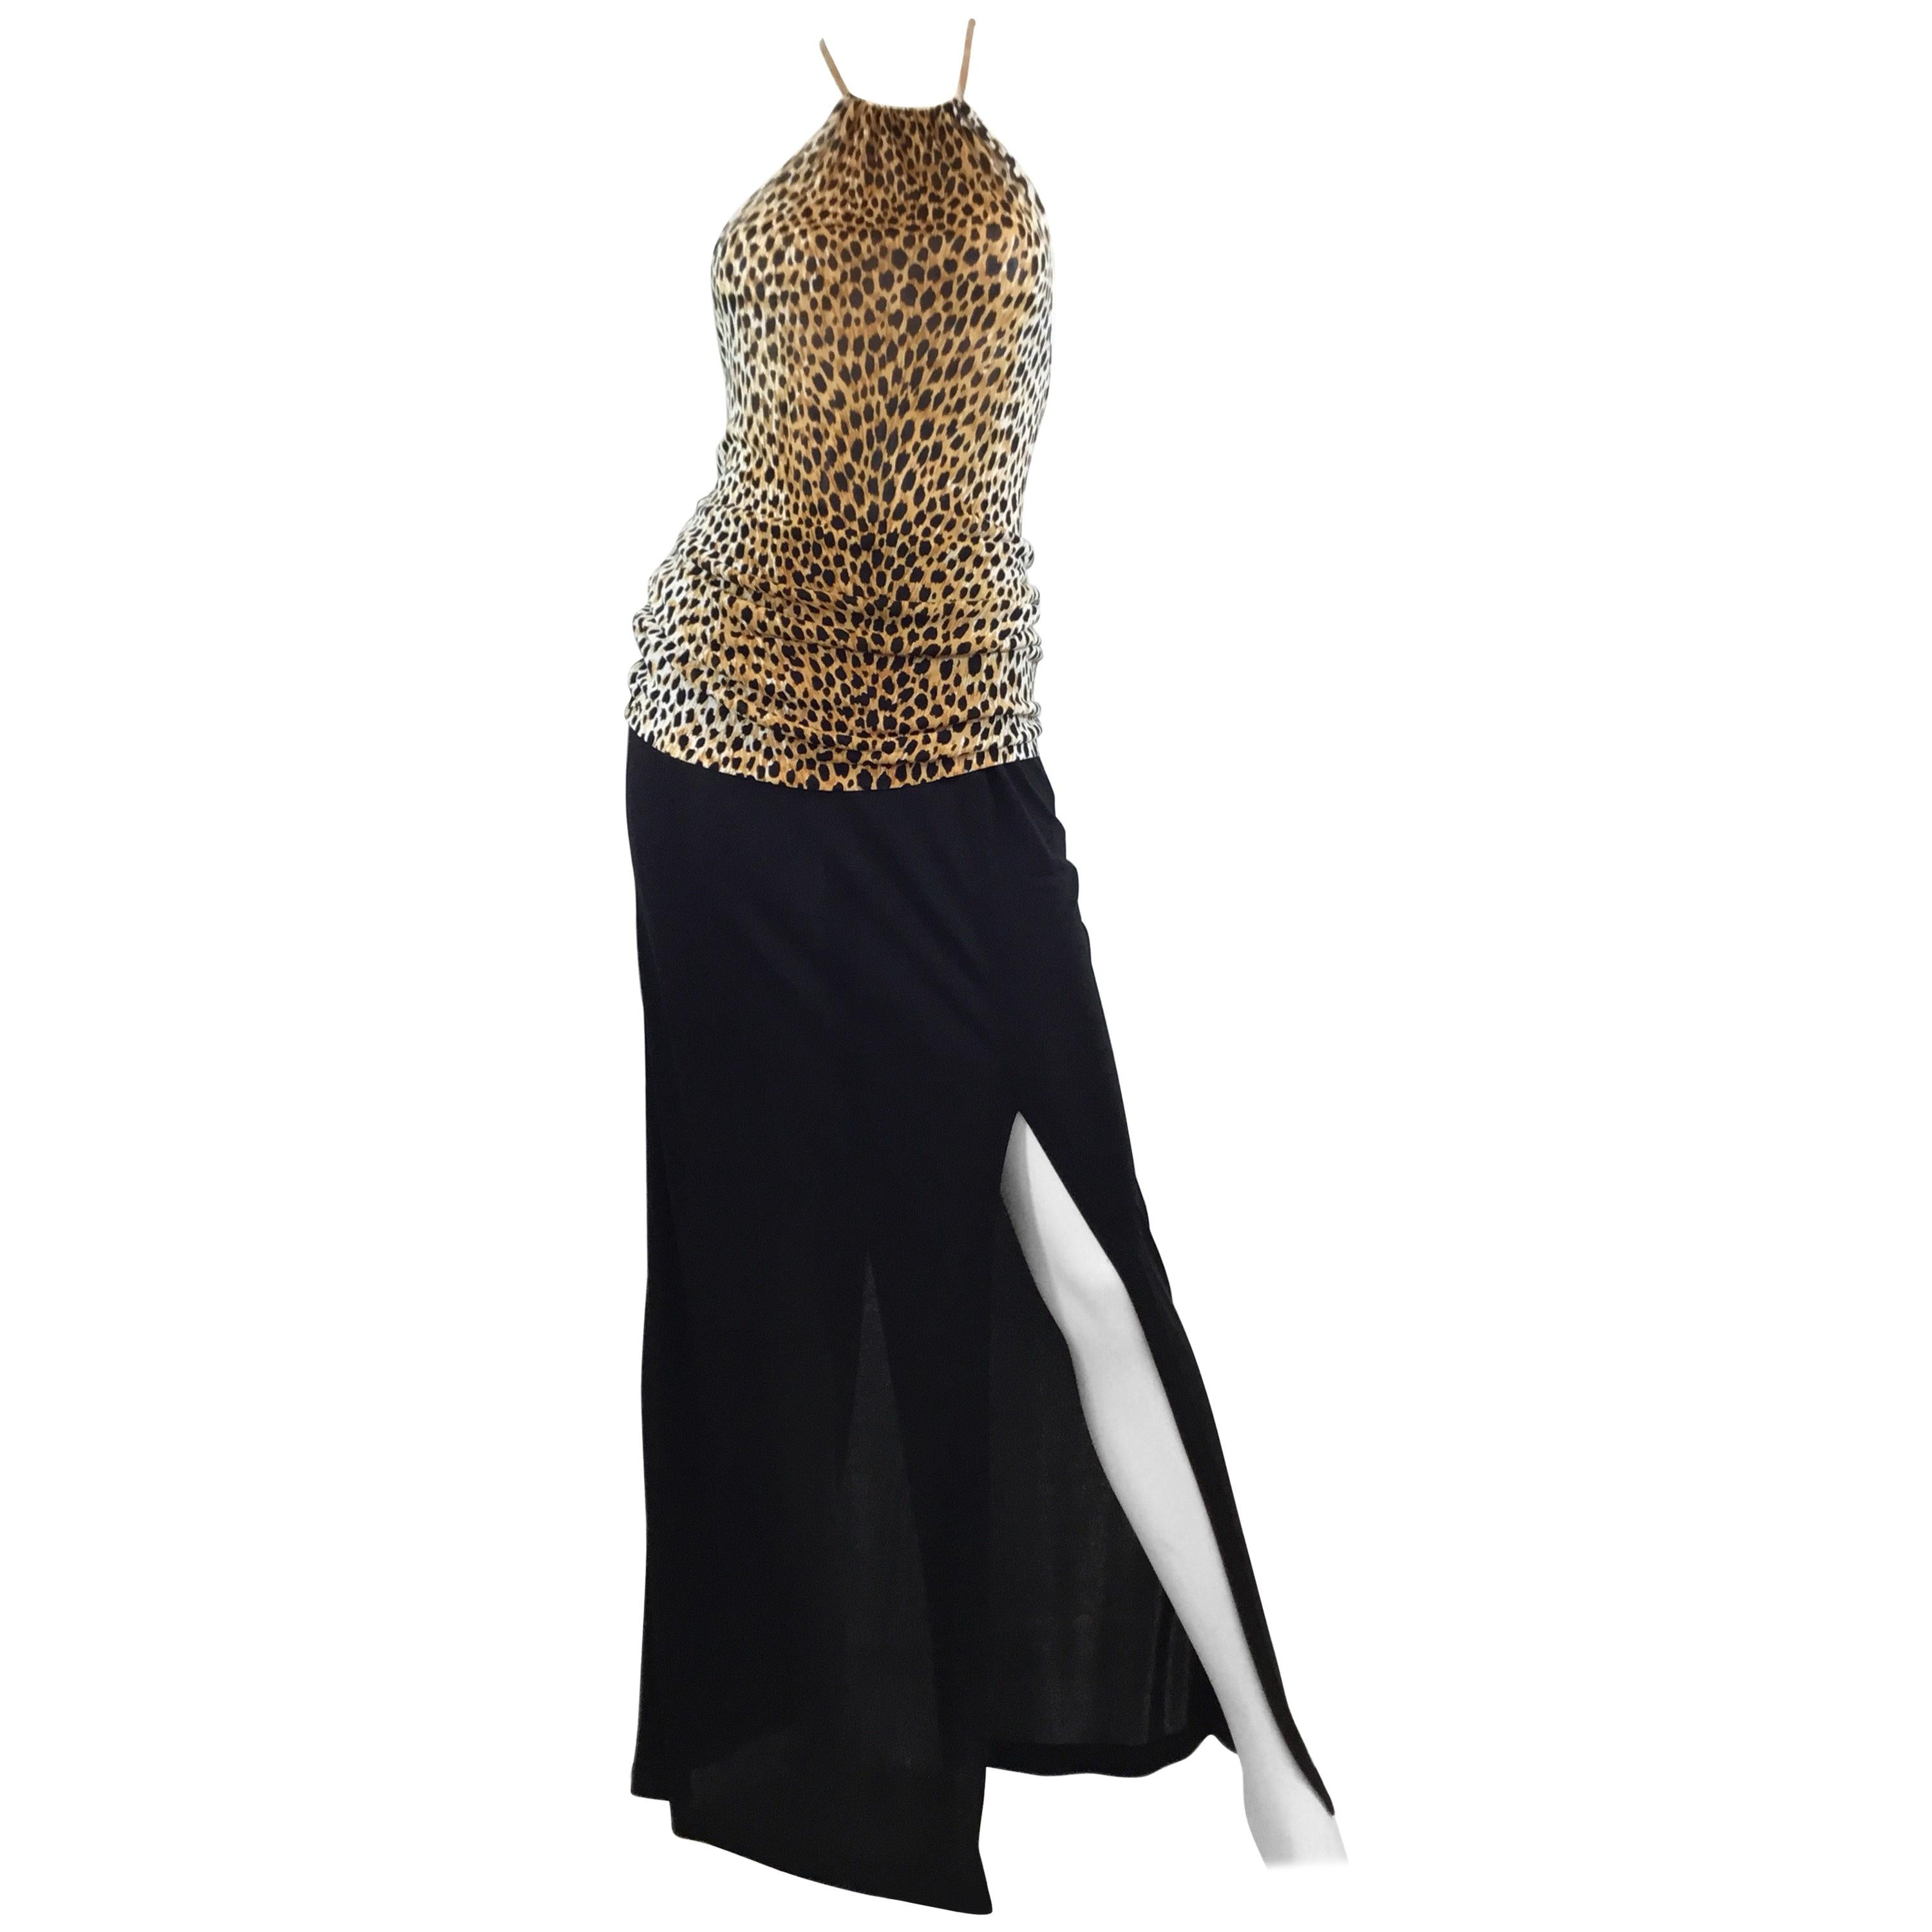 Dolce & Gabbana Leopard Halter Top and Maxi Skirt Ensemble